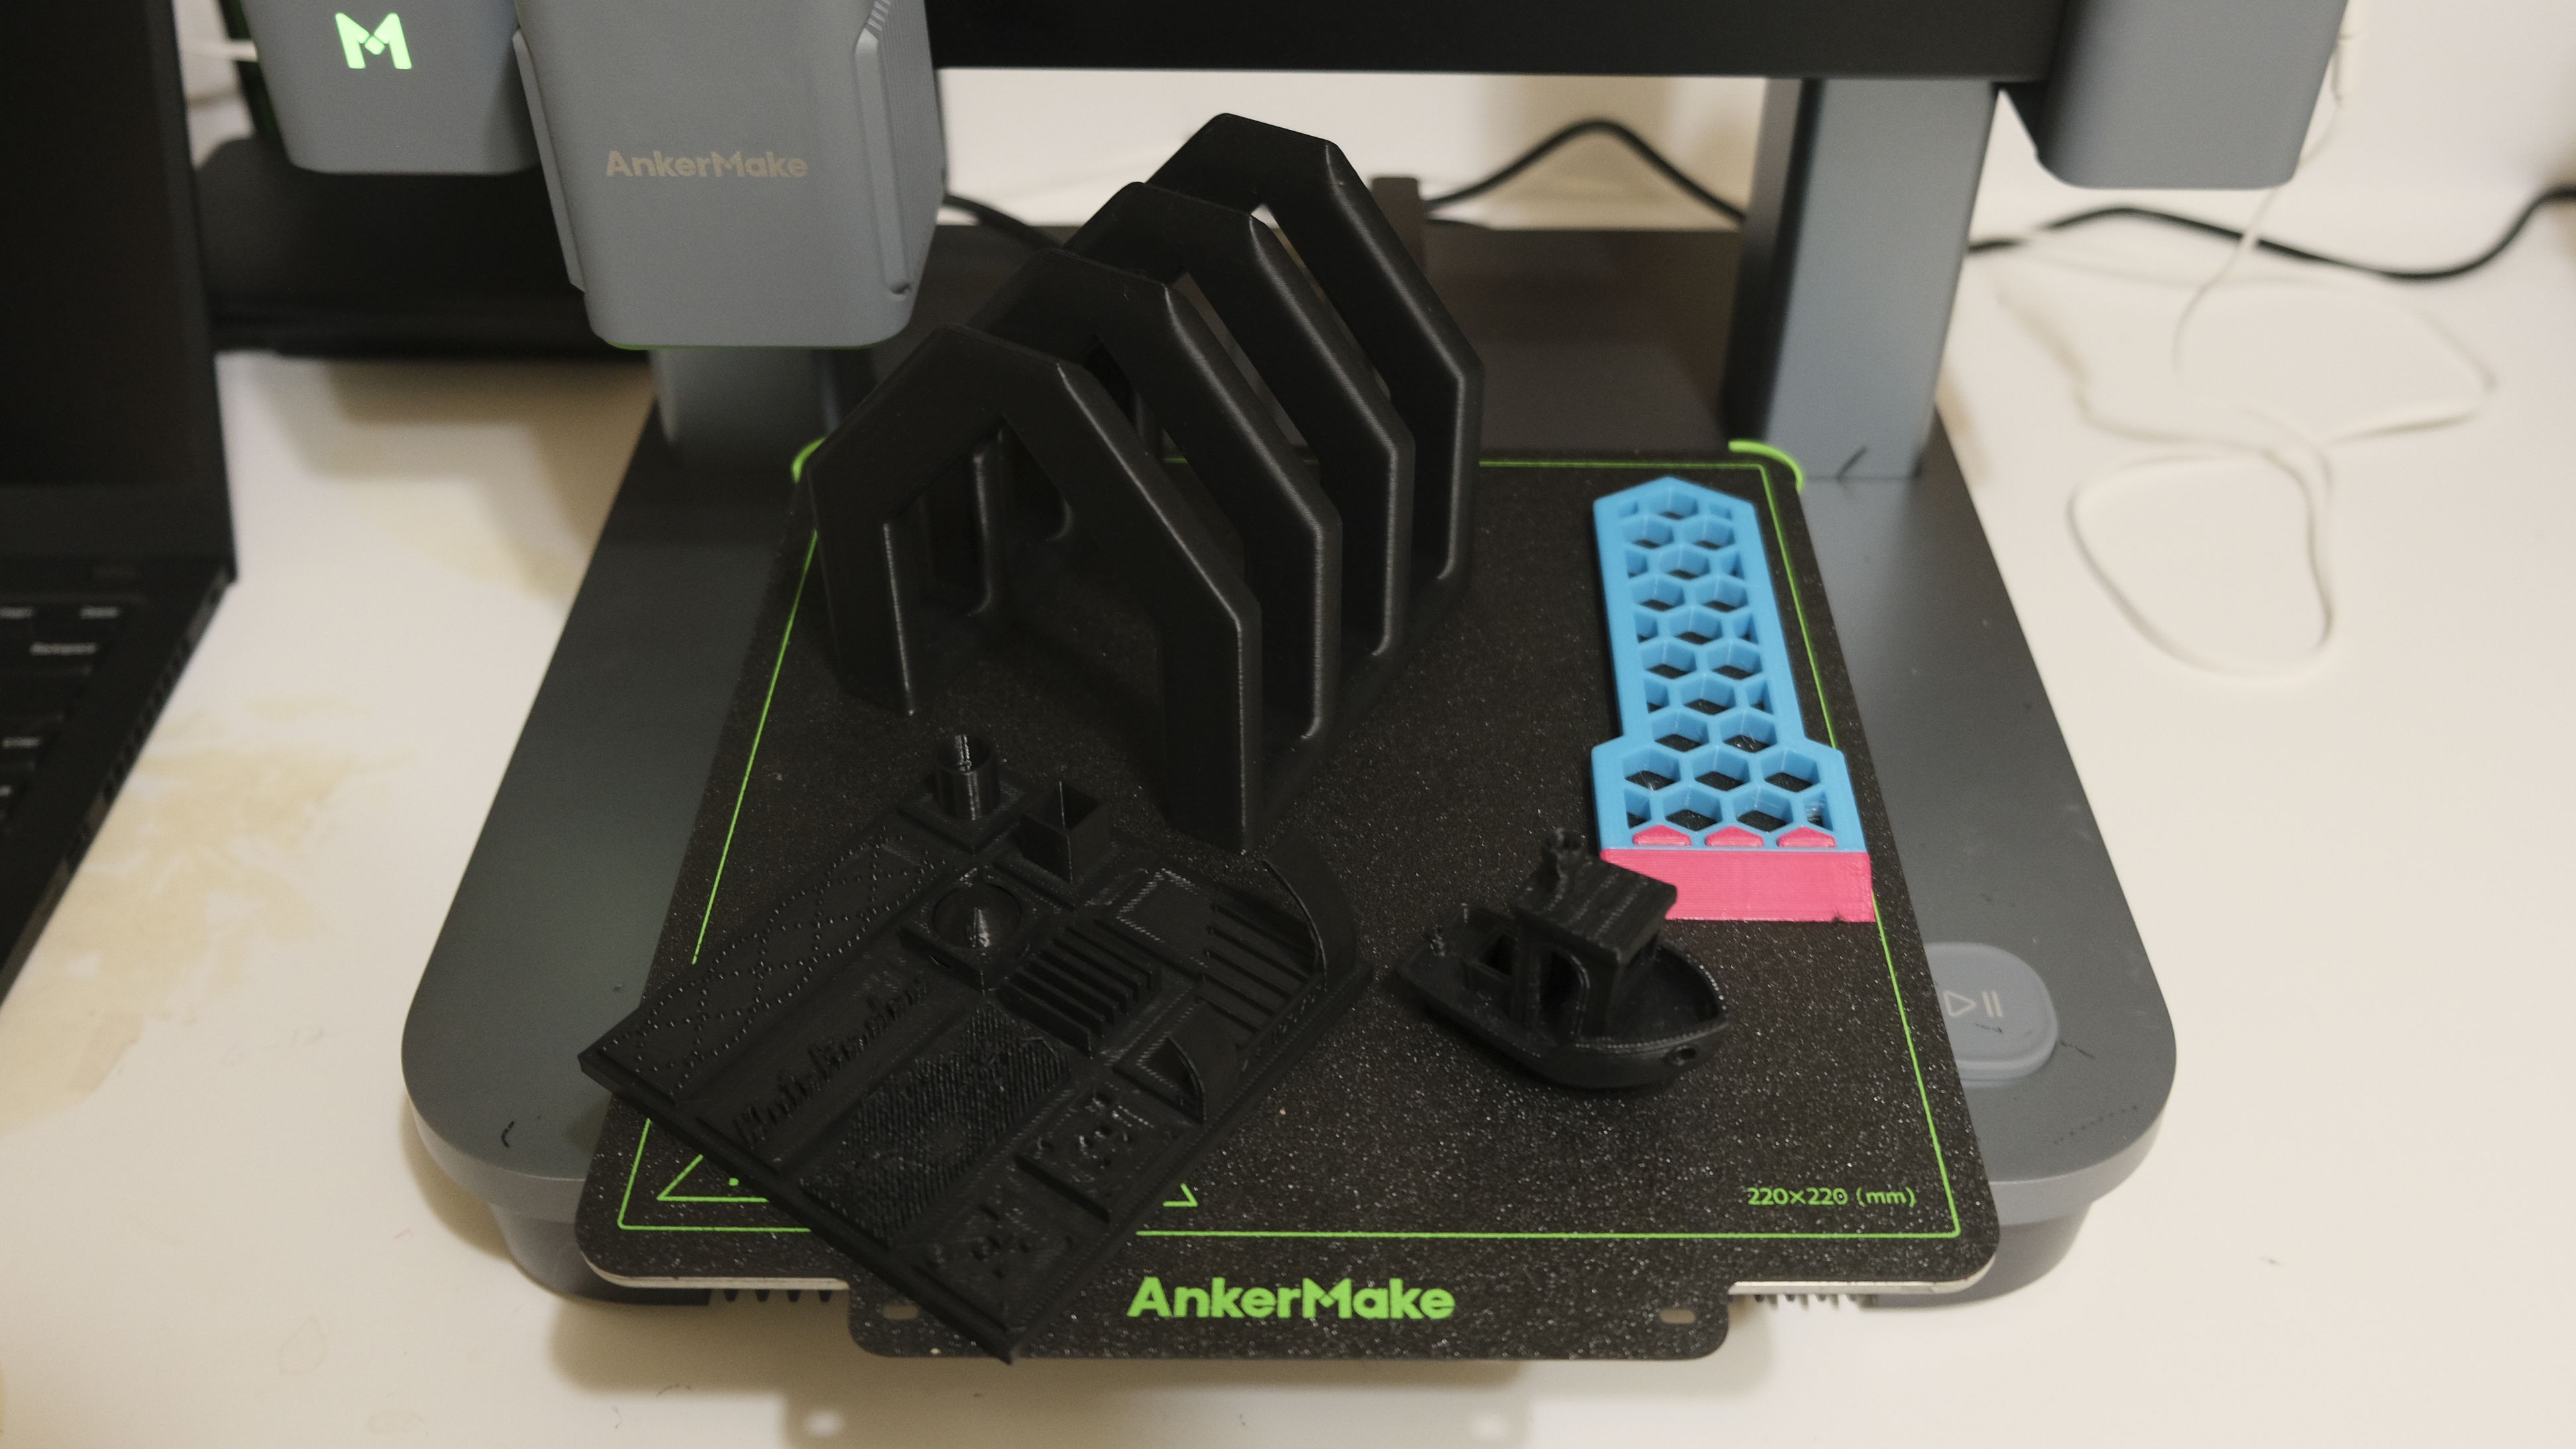 AnkerMake M5C review: An affordable 3D printer